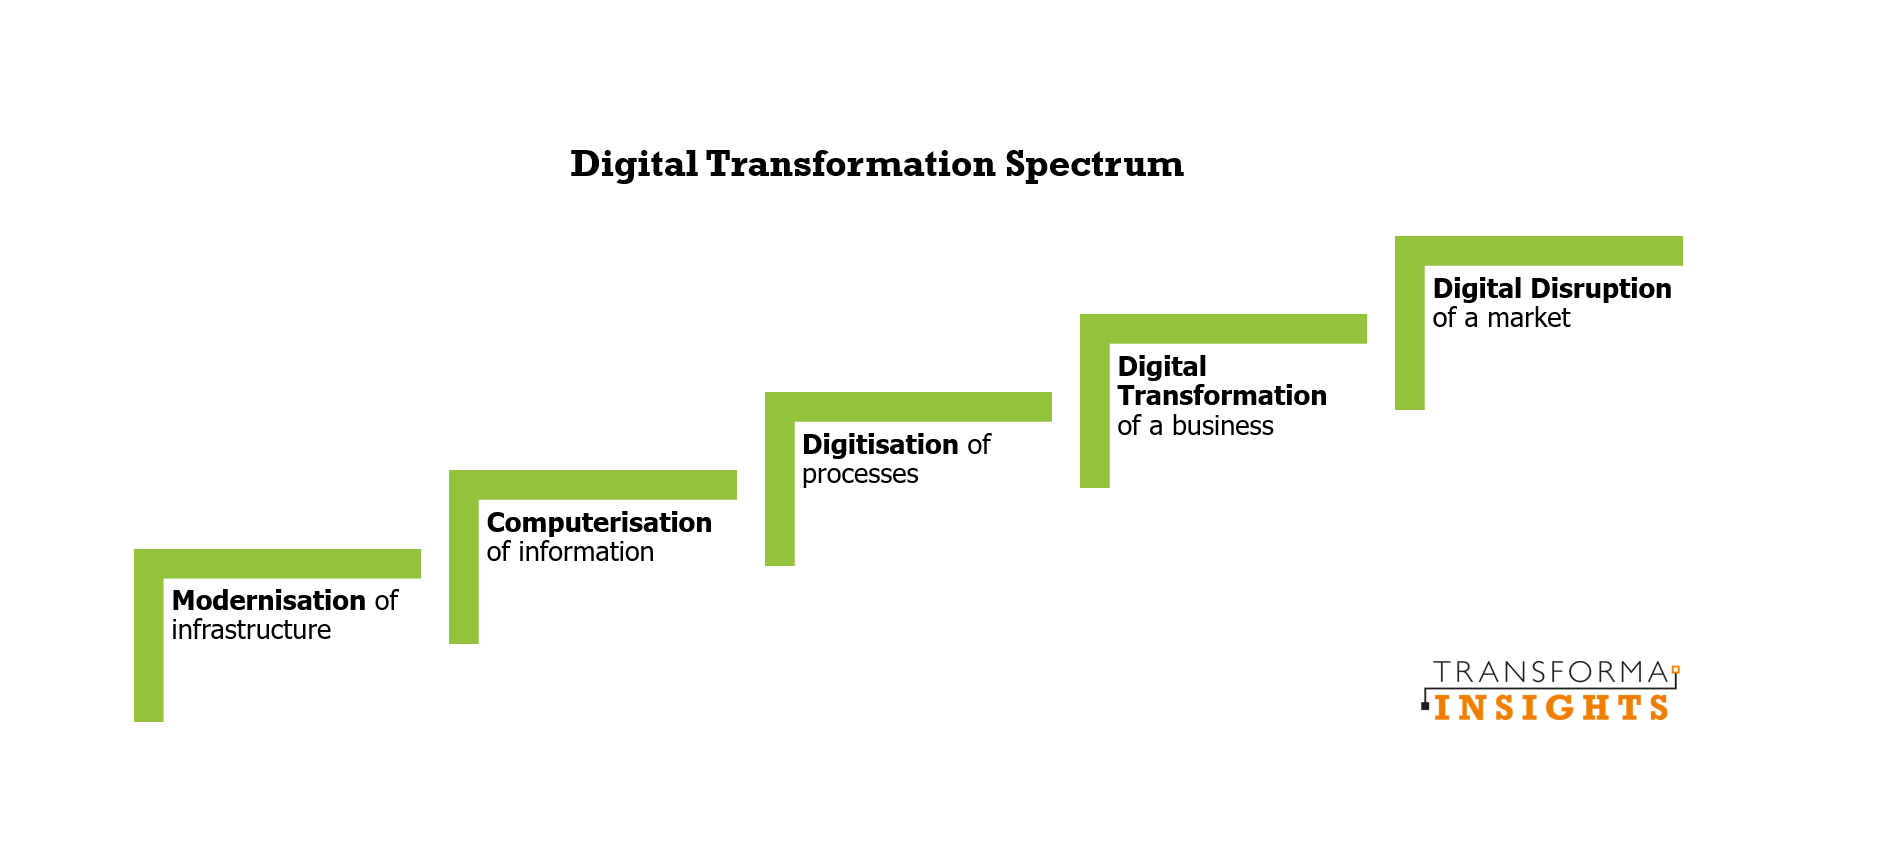 Transforma_Insights_DX_spectrum.png